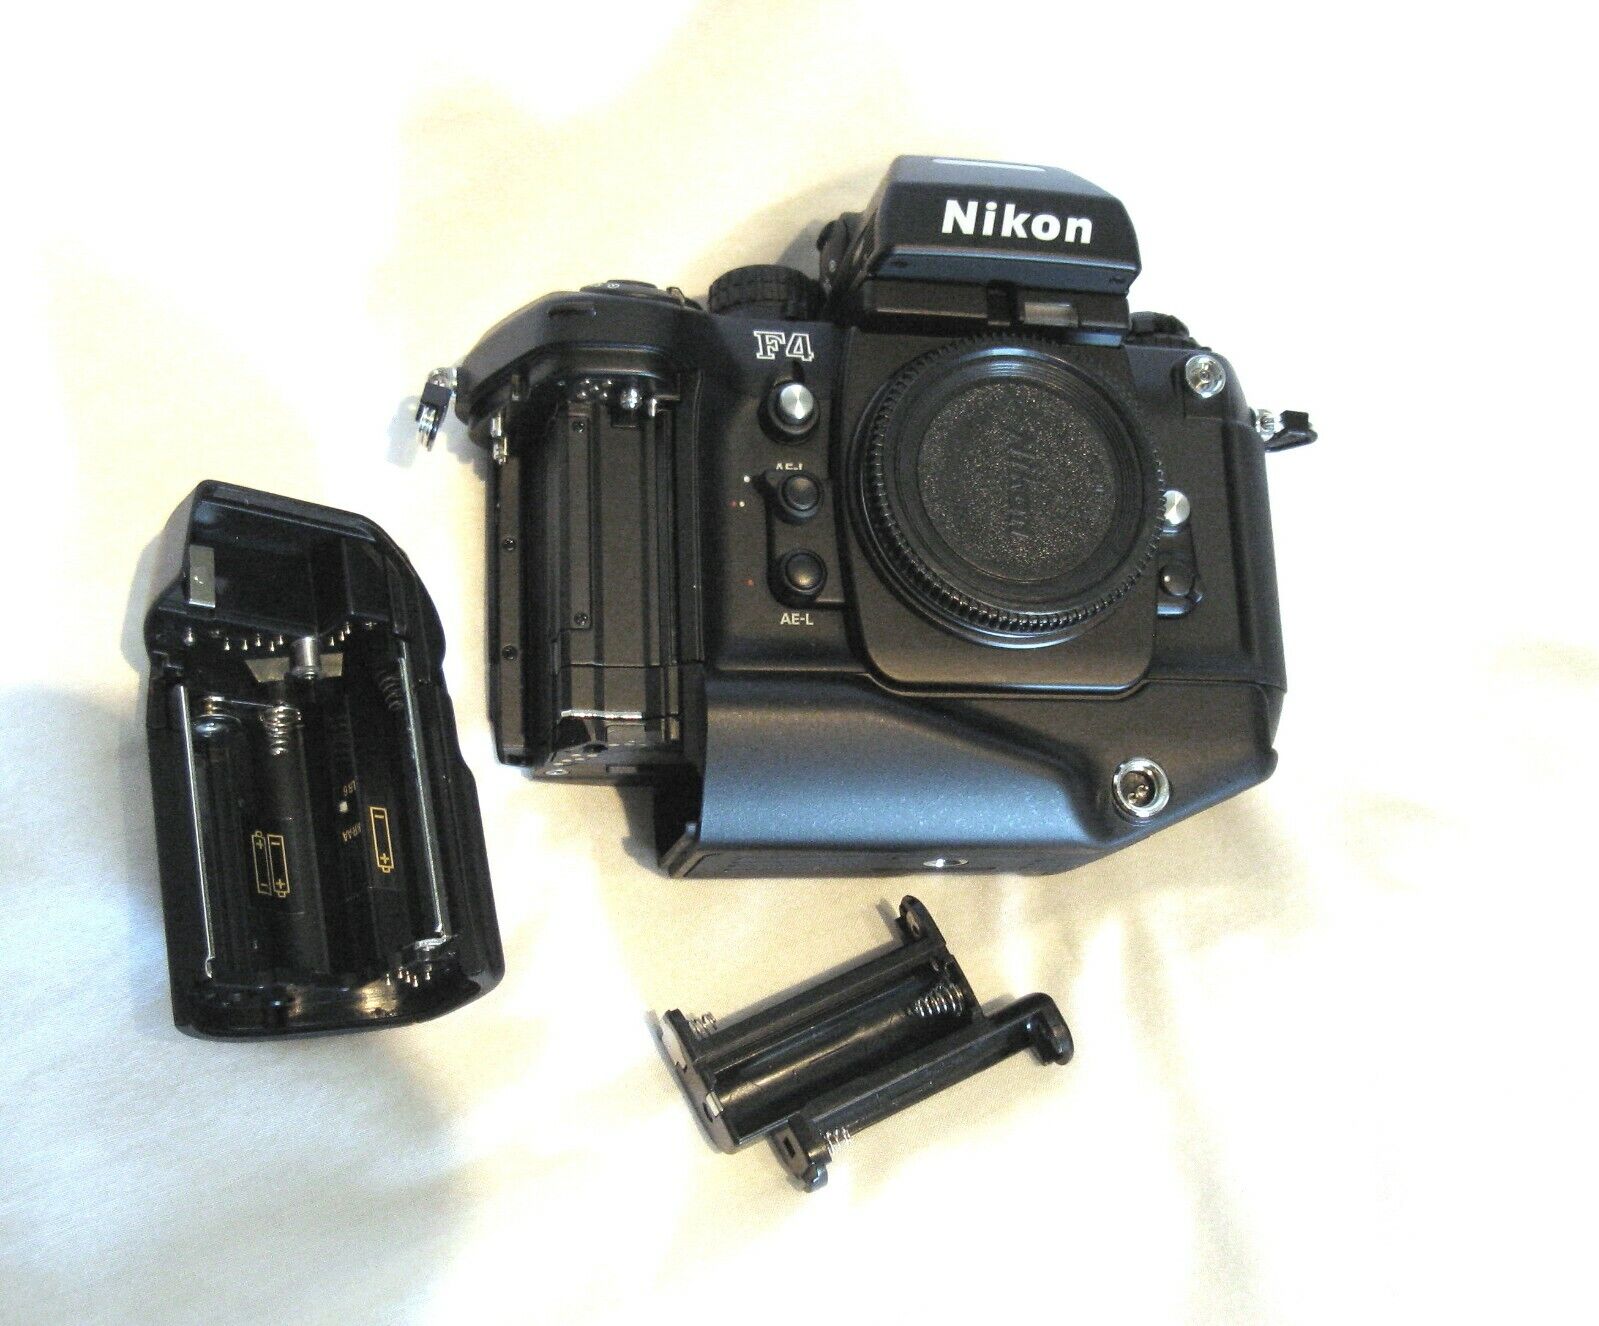 Nikon F4s 35mm SLR Film Camera Body Only for sale online | eBay